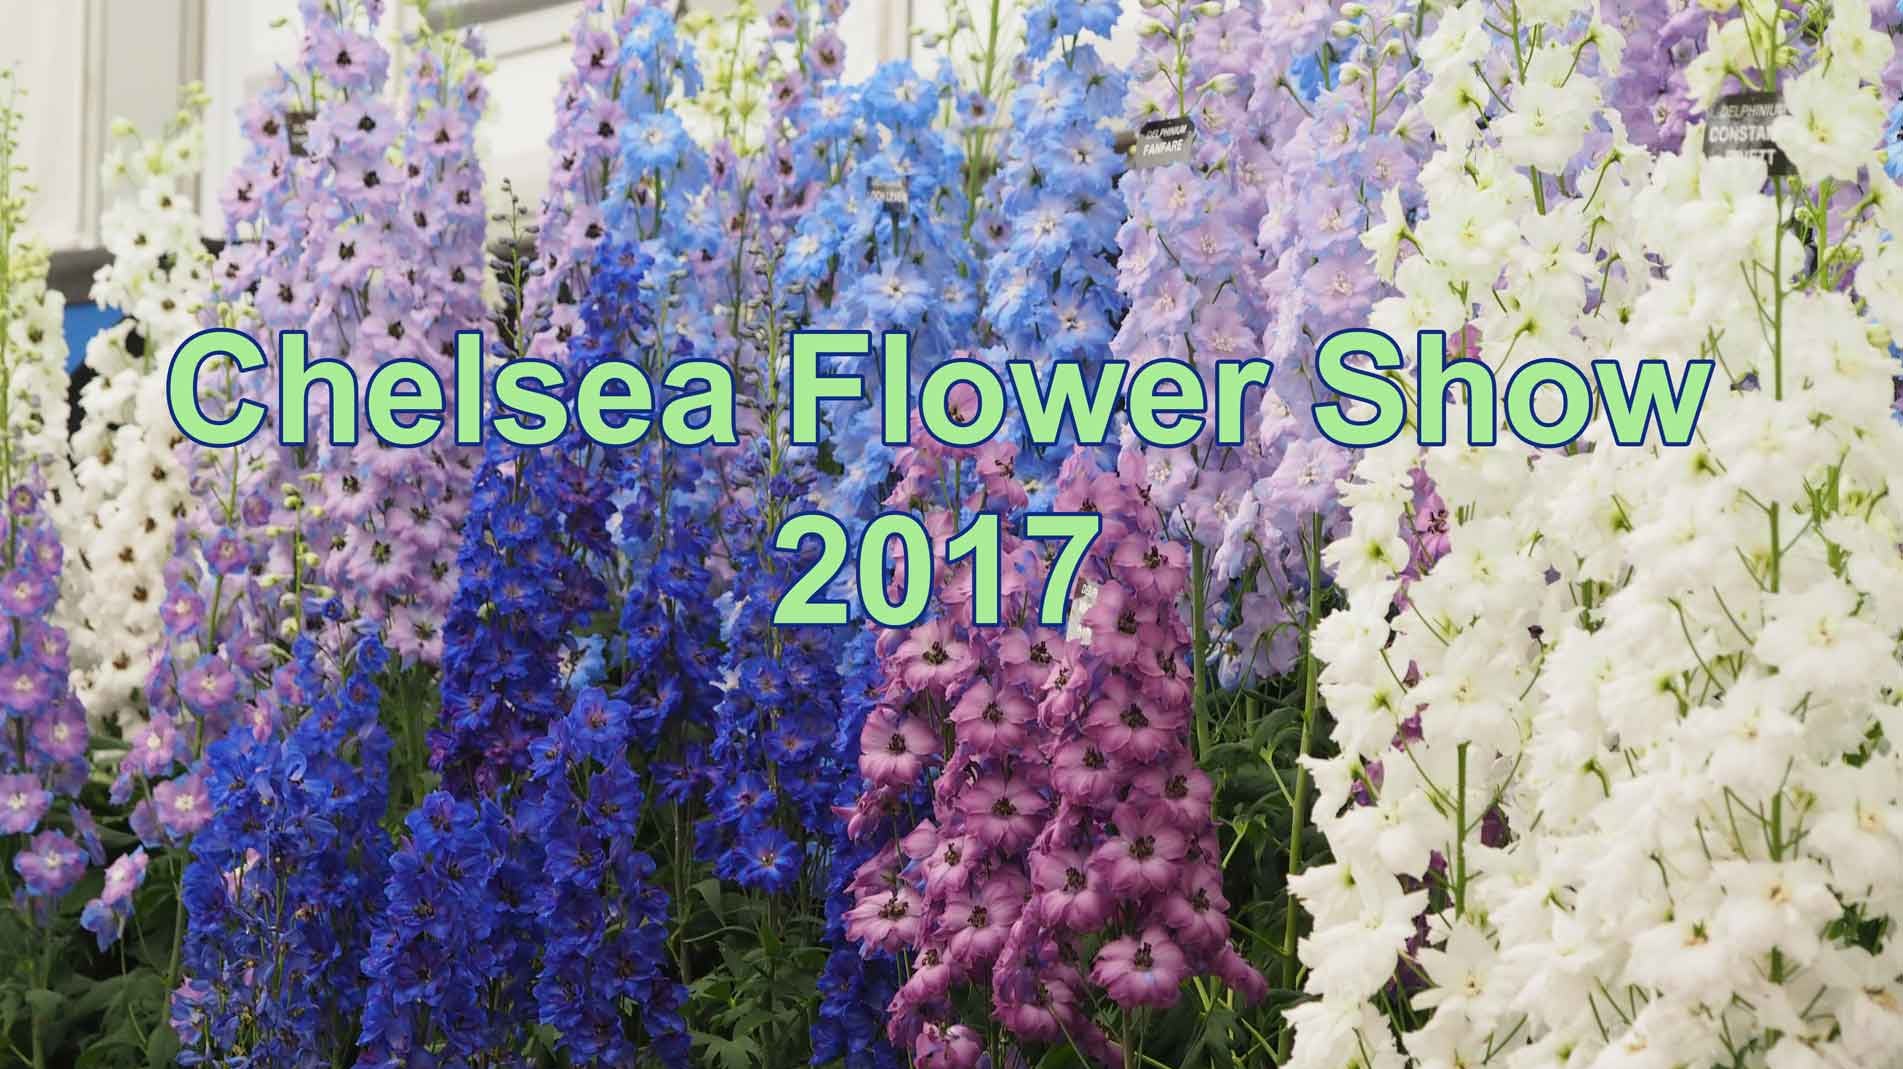 Haxnicks preparations for RHS Chelsea Flower Show 2017